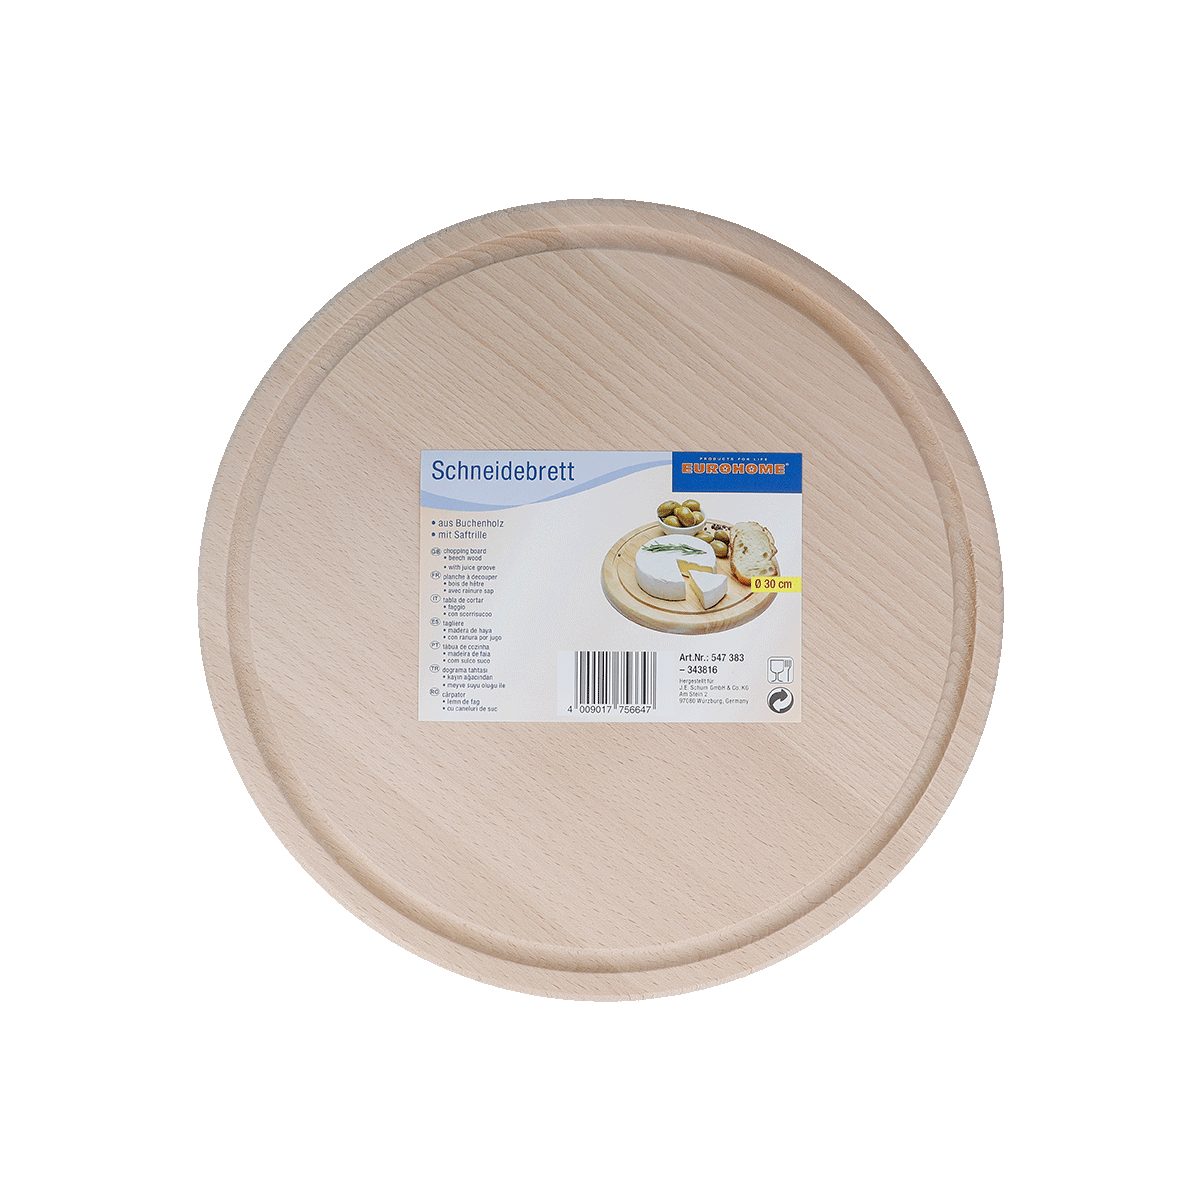 EUROHOME Brotschneidebrett Buchenholz Schneidebrett cm), mit Küche Ø30 rund (Holzbrett - Rillen, Servierbrett Buchenholz, Frühstücksbrettchen